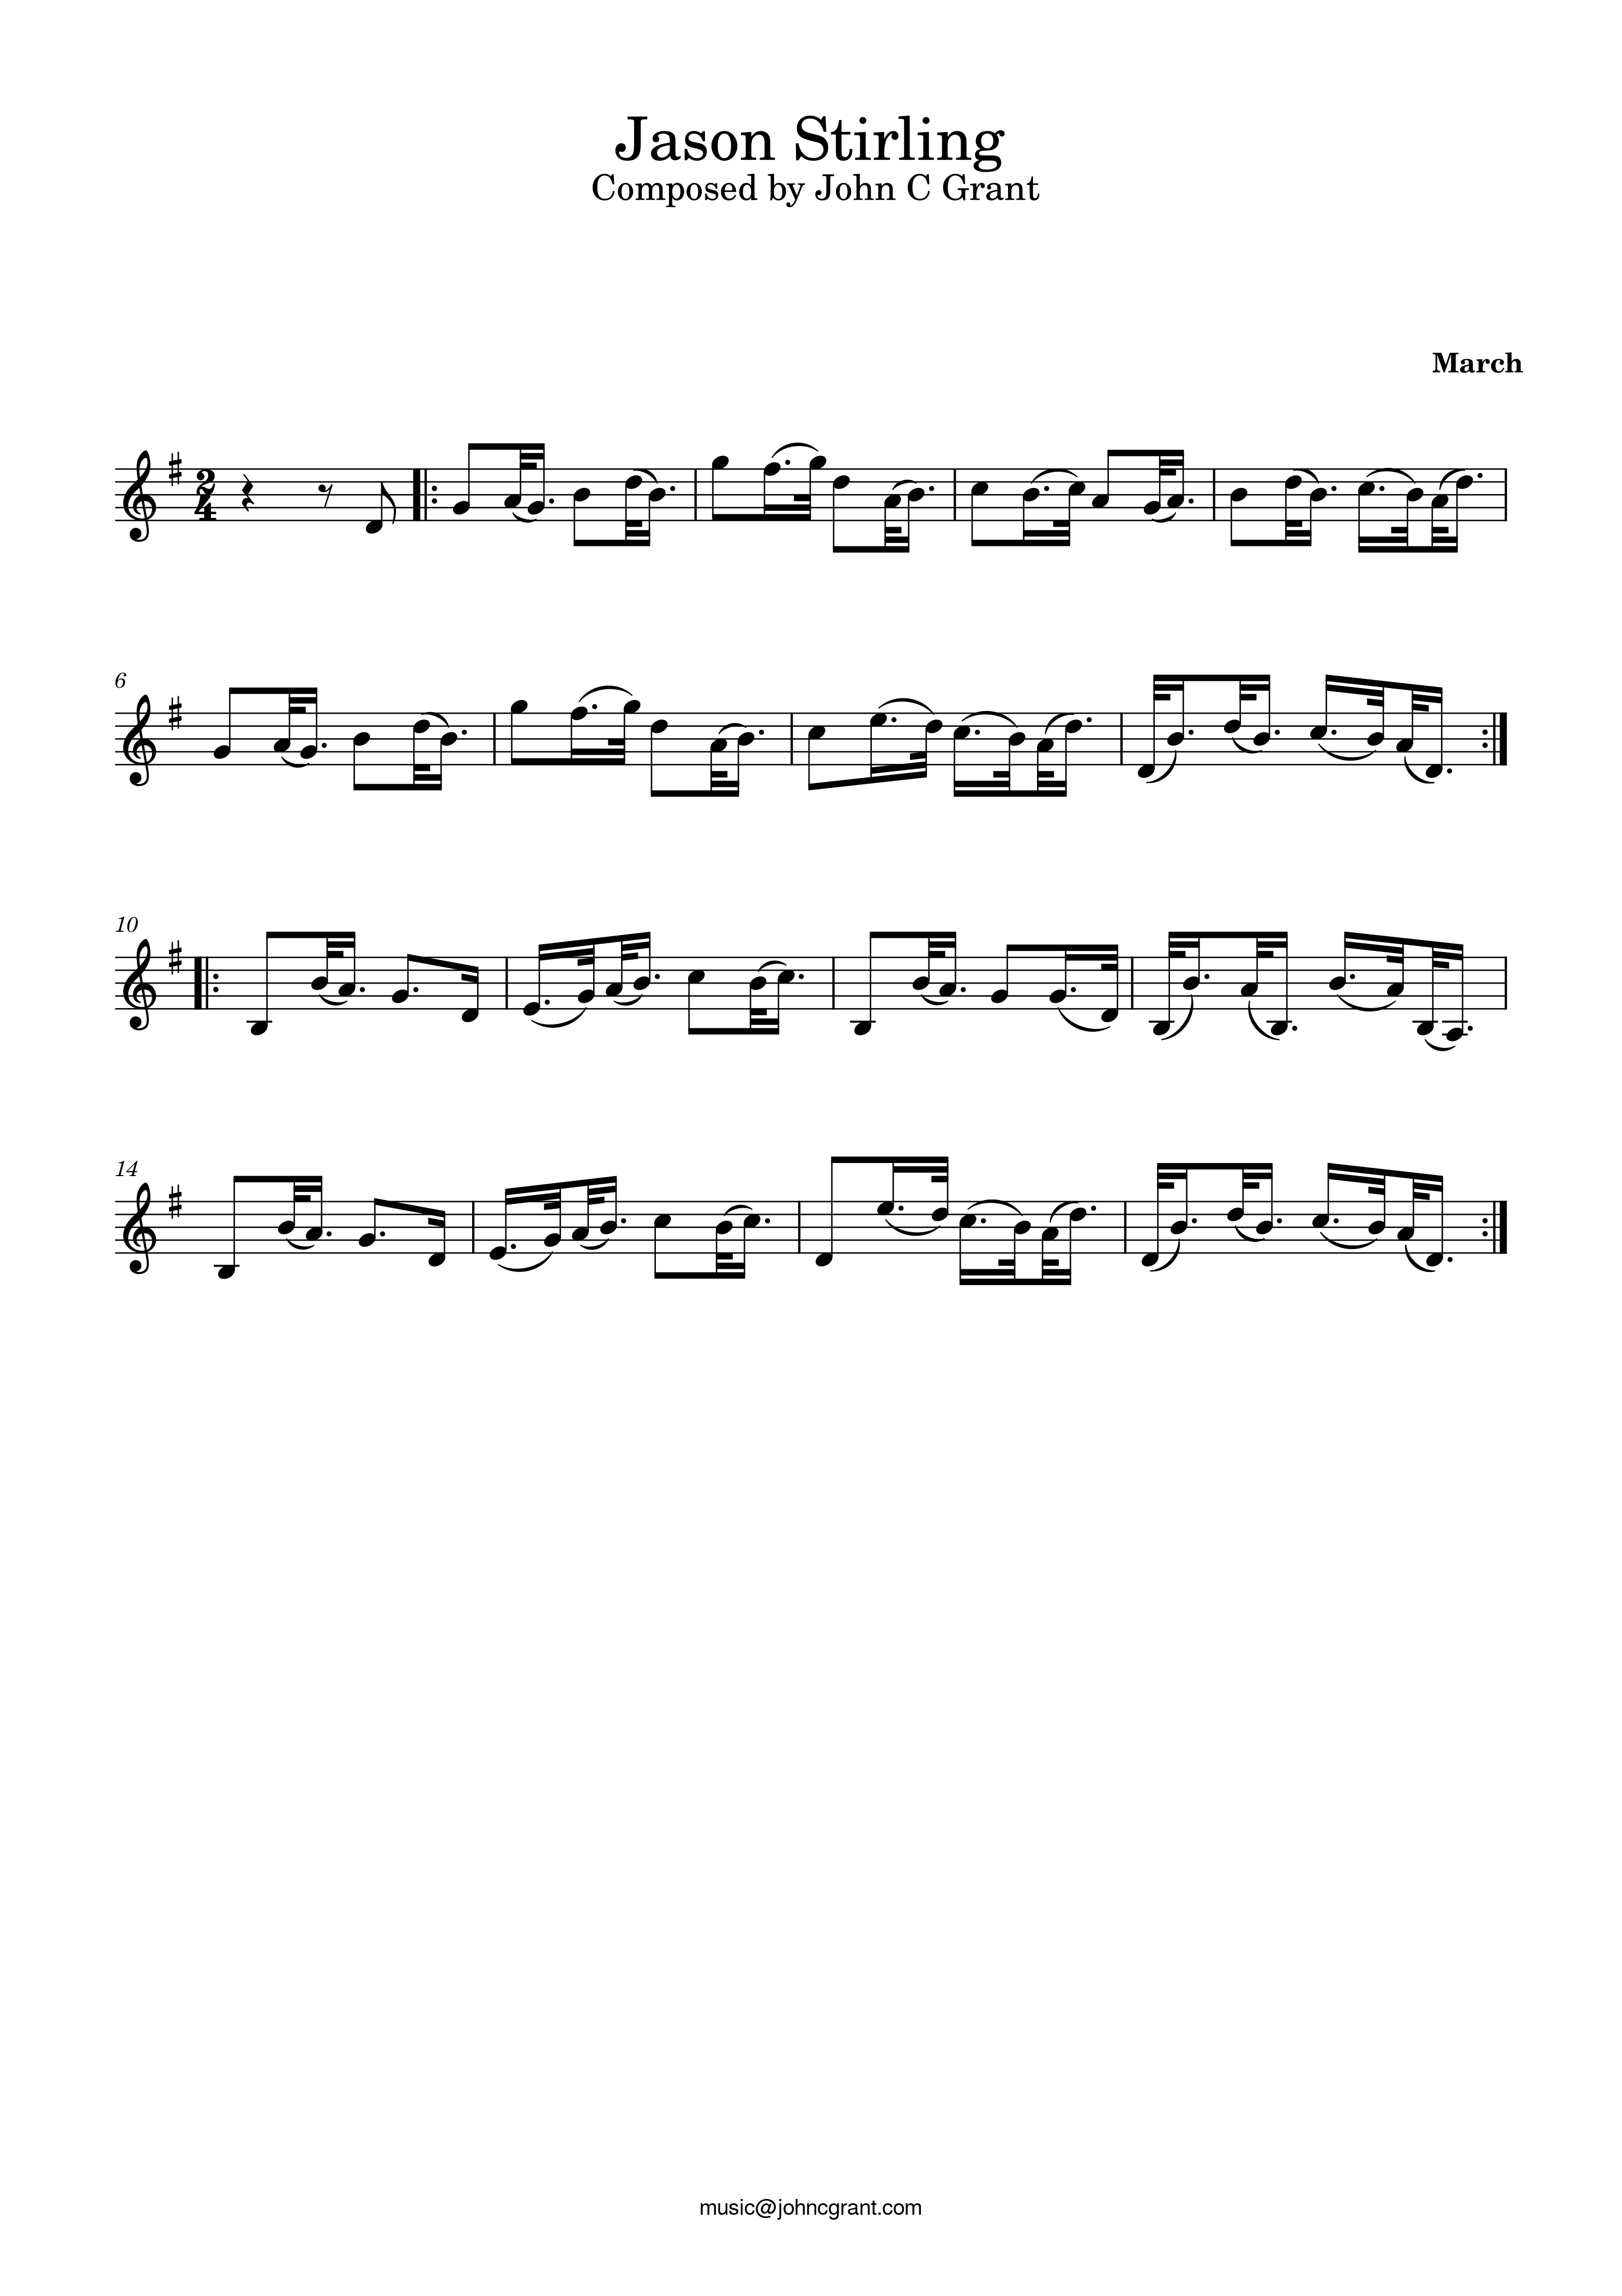 Jason Stirling - Composed by John C Grant (https://johncgrant.com). Traditional composer from Kilmarnock, Ayrshire, Scotland.